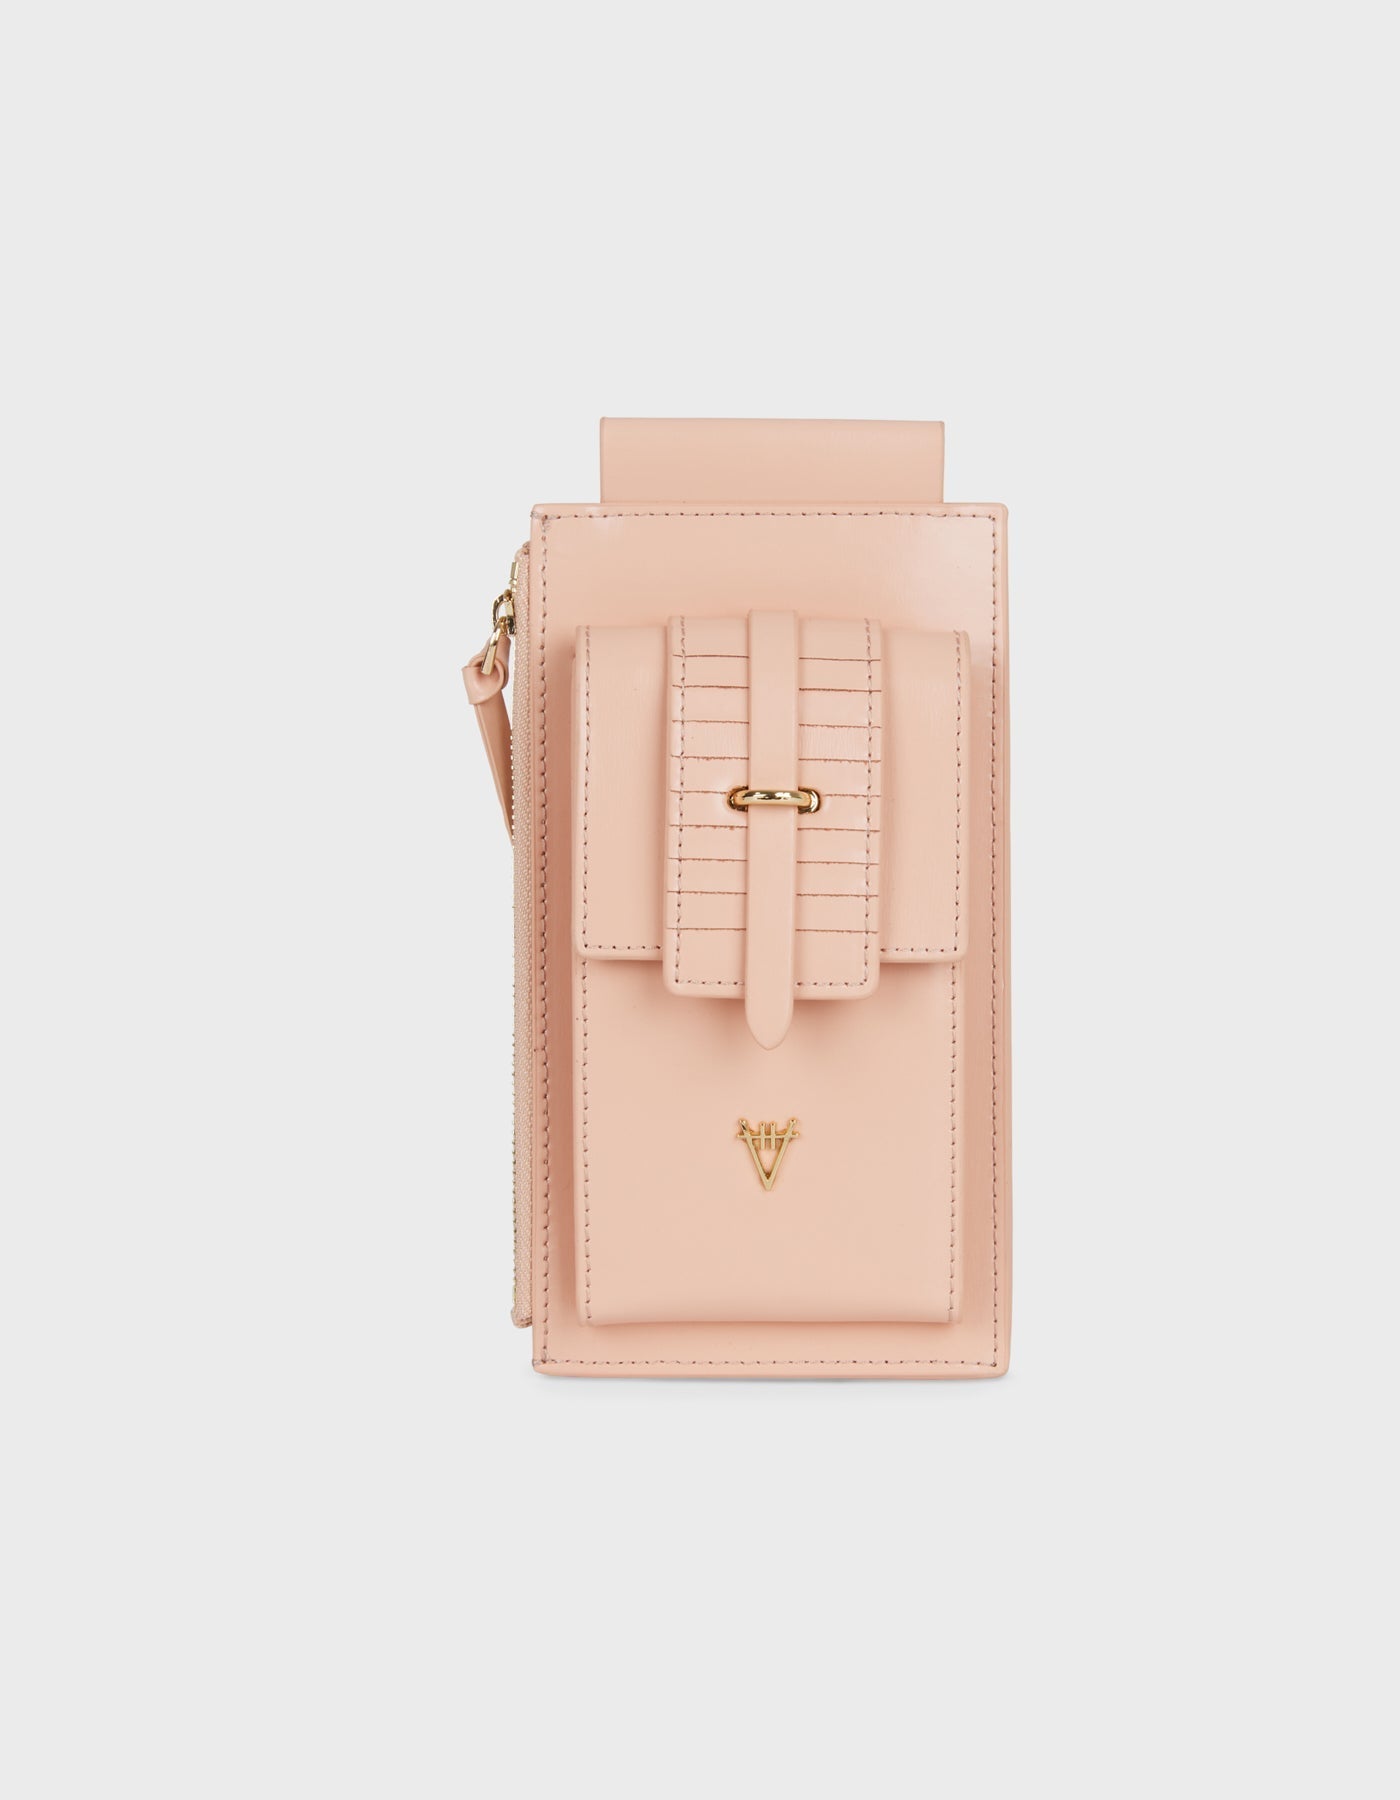 HiVa Atelier | Crossbody Phone Bag Peach Sand | Beautiful and Versatile